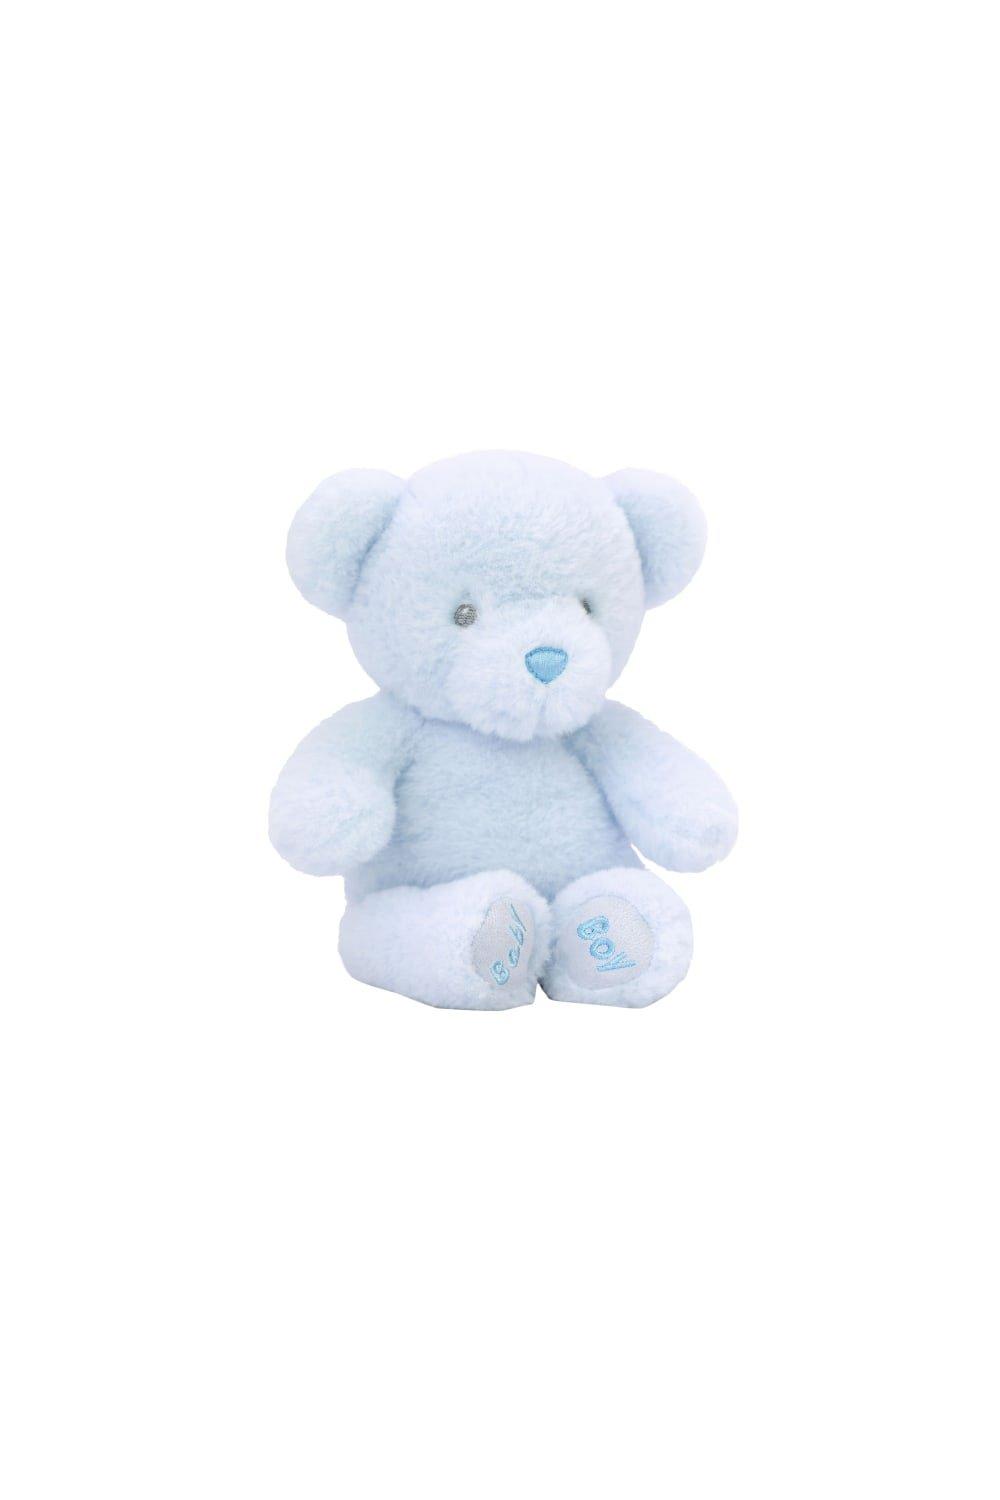 Keel Toys Bear Plush Toy